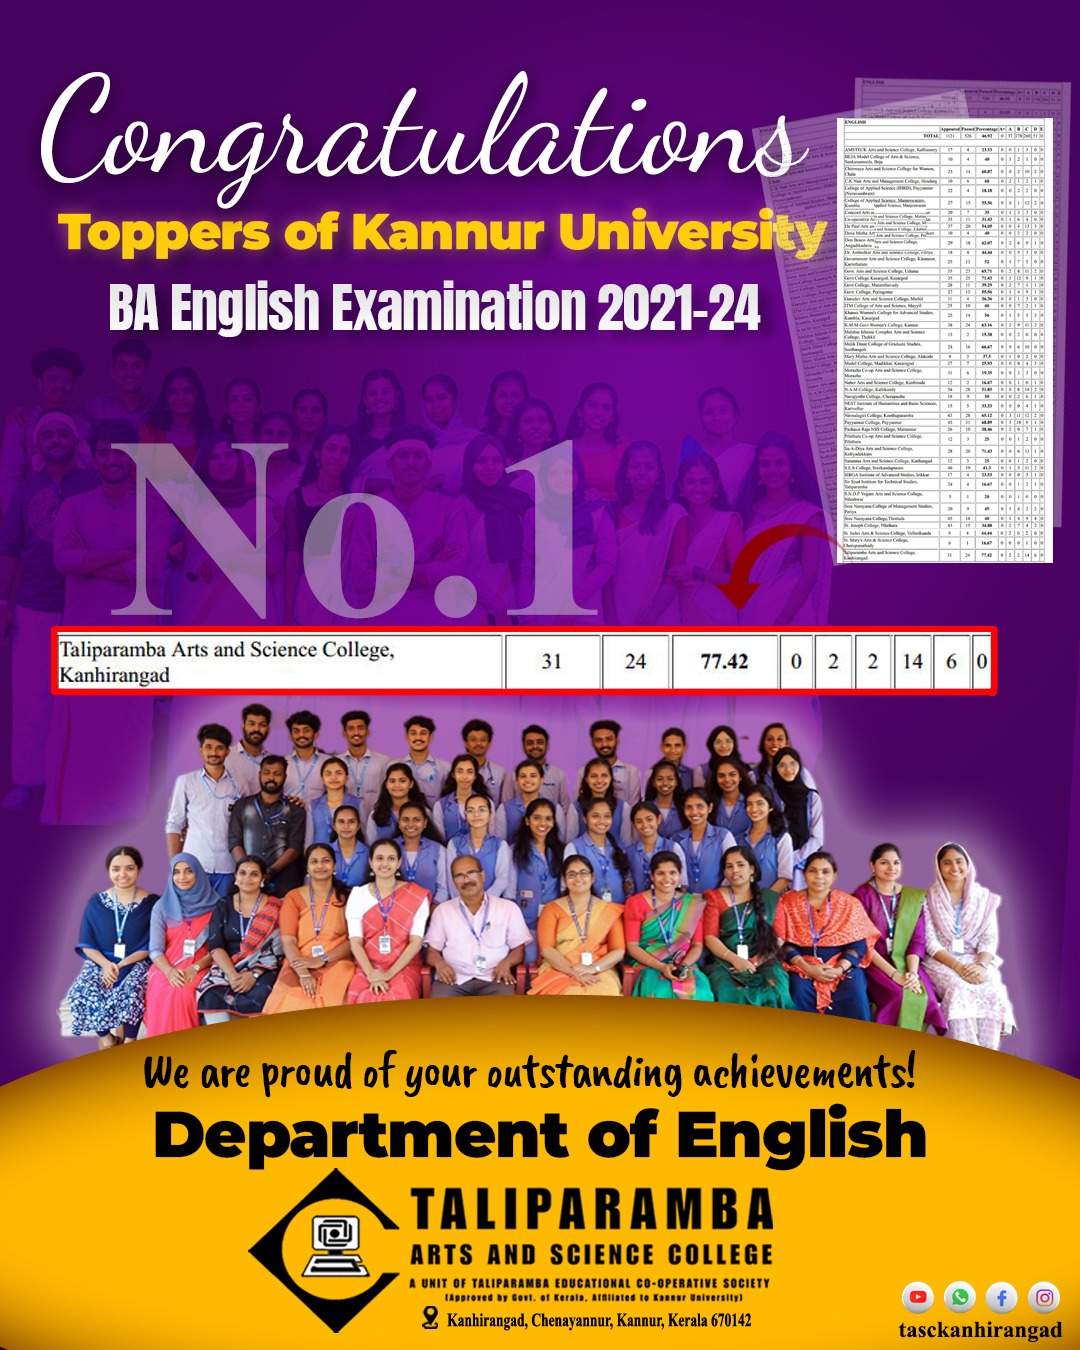 Toppers of Kannur University BA English Examination 2021-24